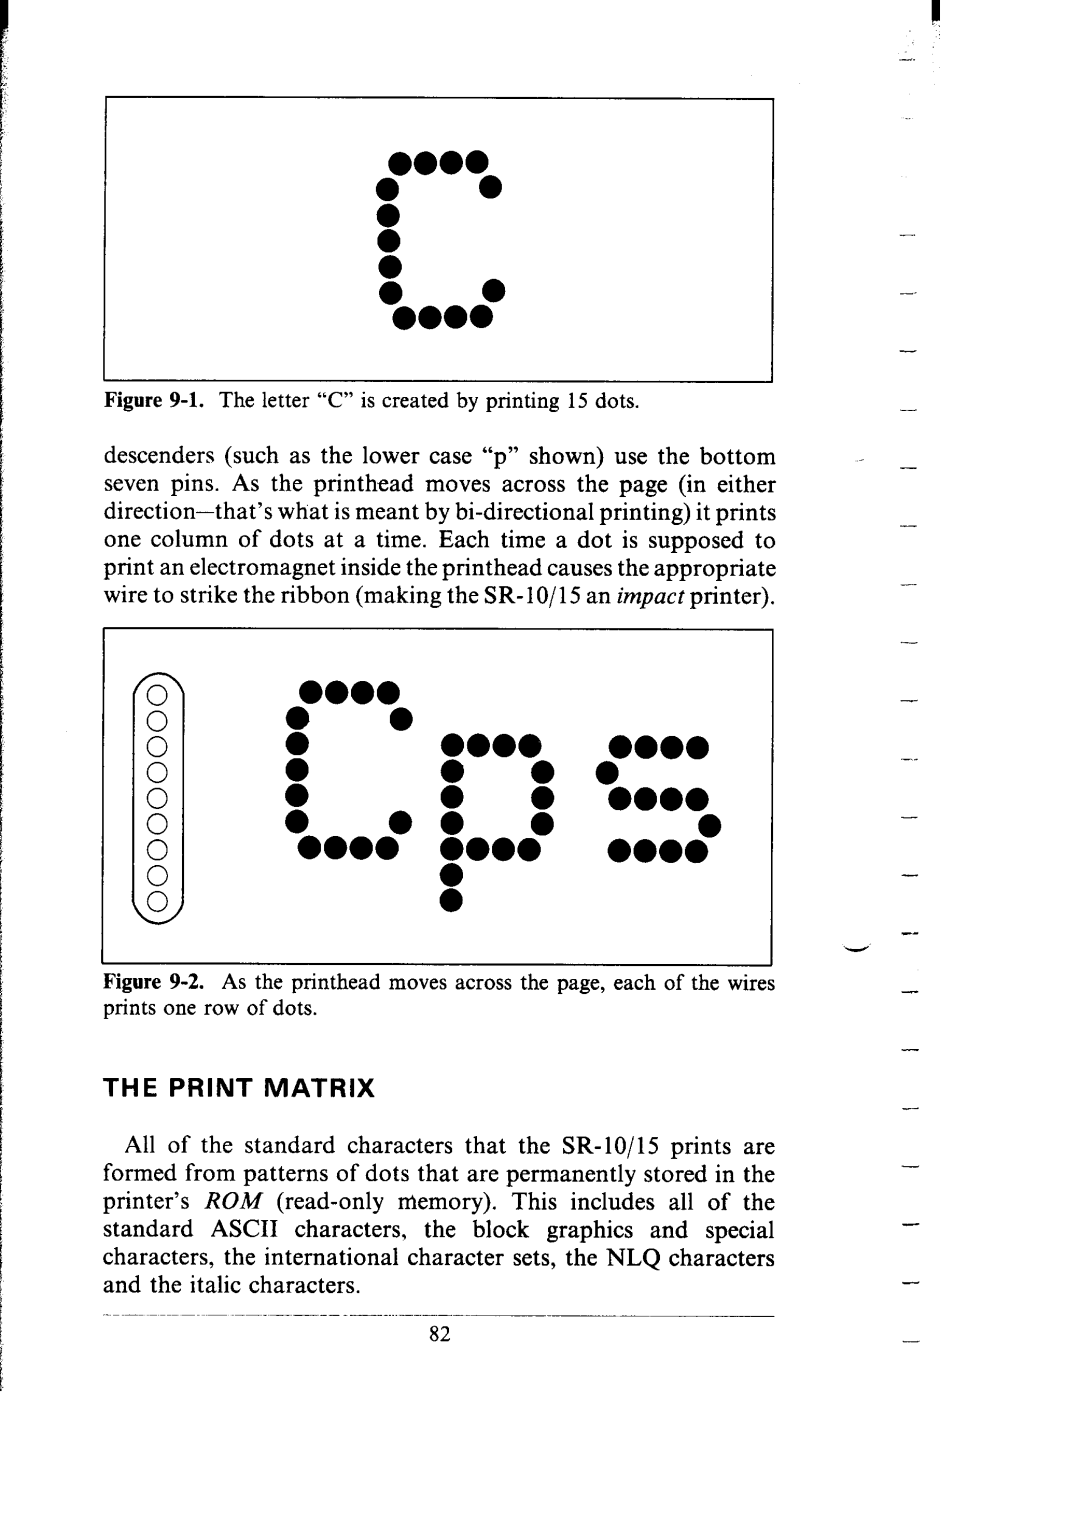 Star Micronics SR-10/I5 user manual The Print Matrix, 0.0 oao 